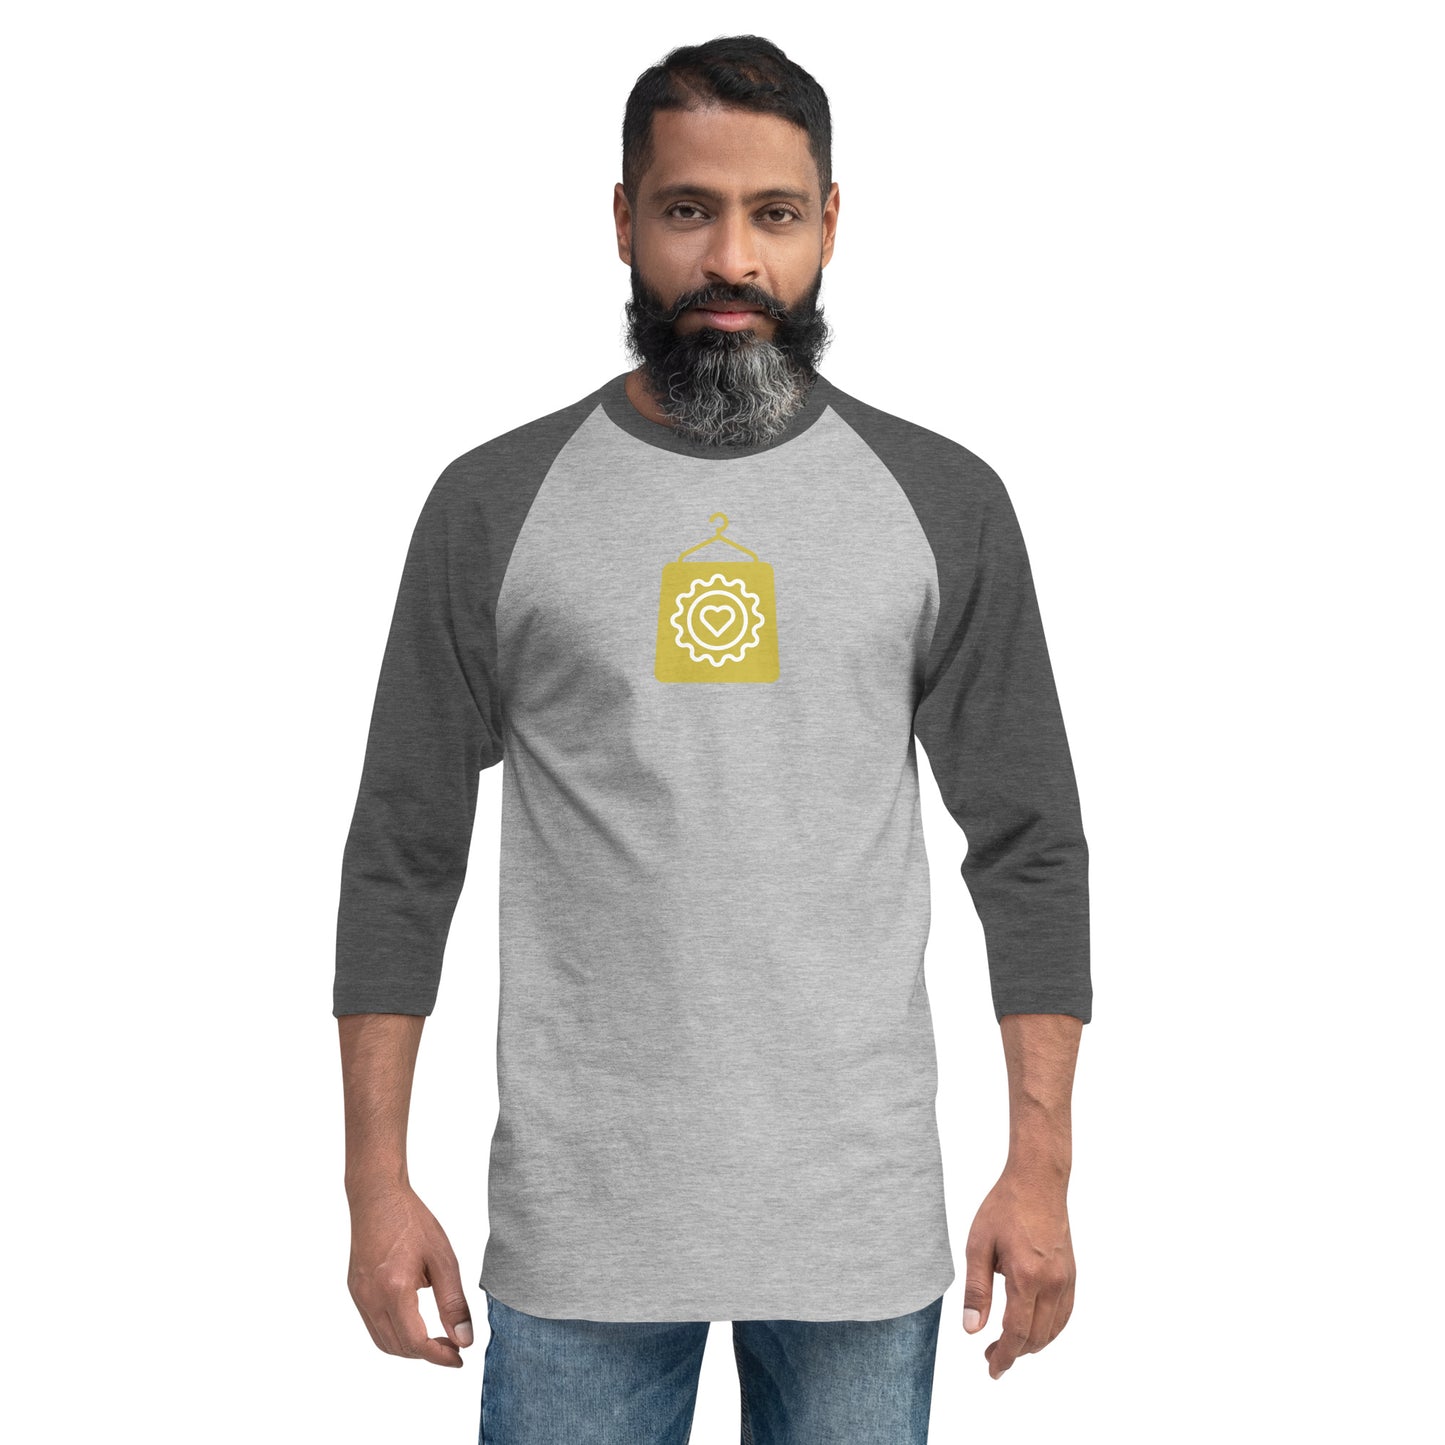 Shop Custom Swag 3/4 sleeve raglan shirt